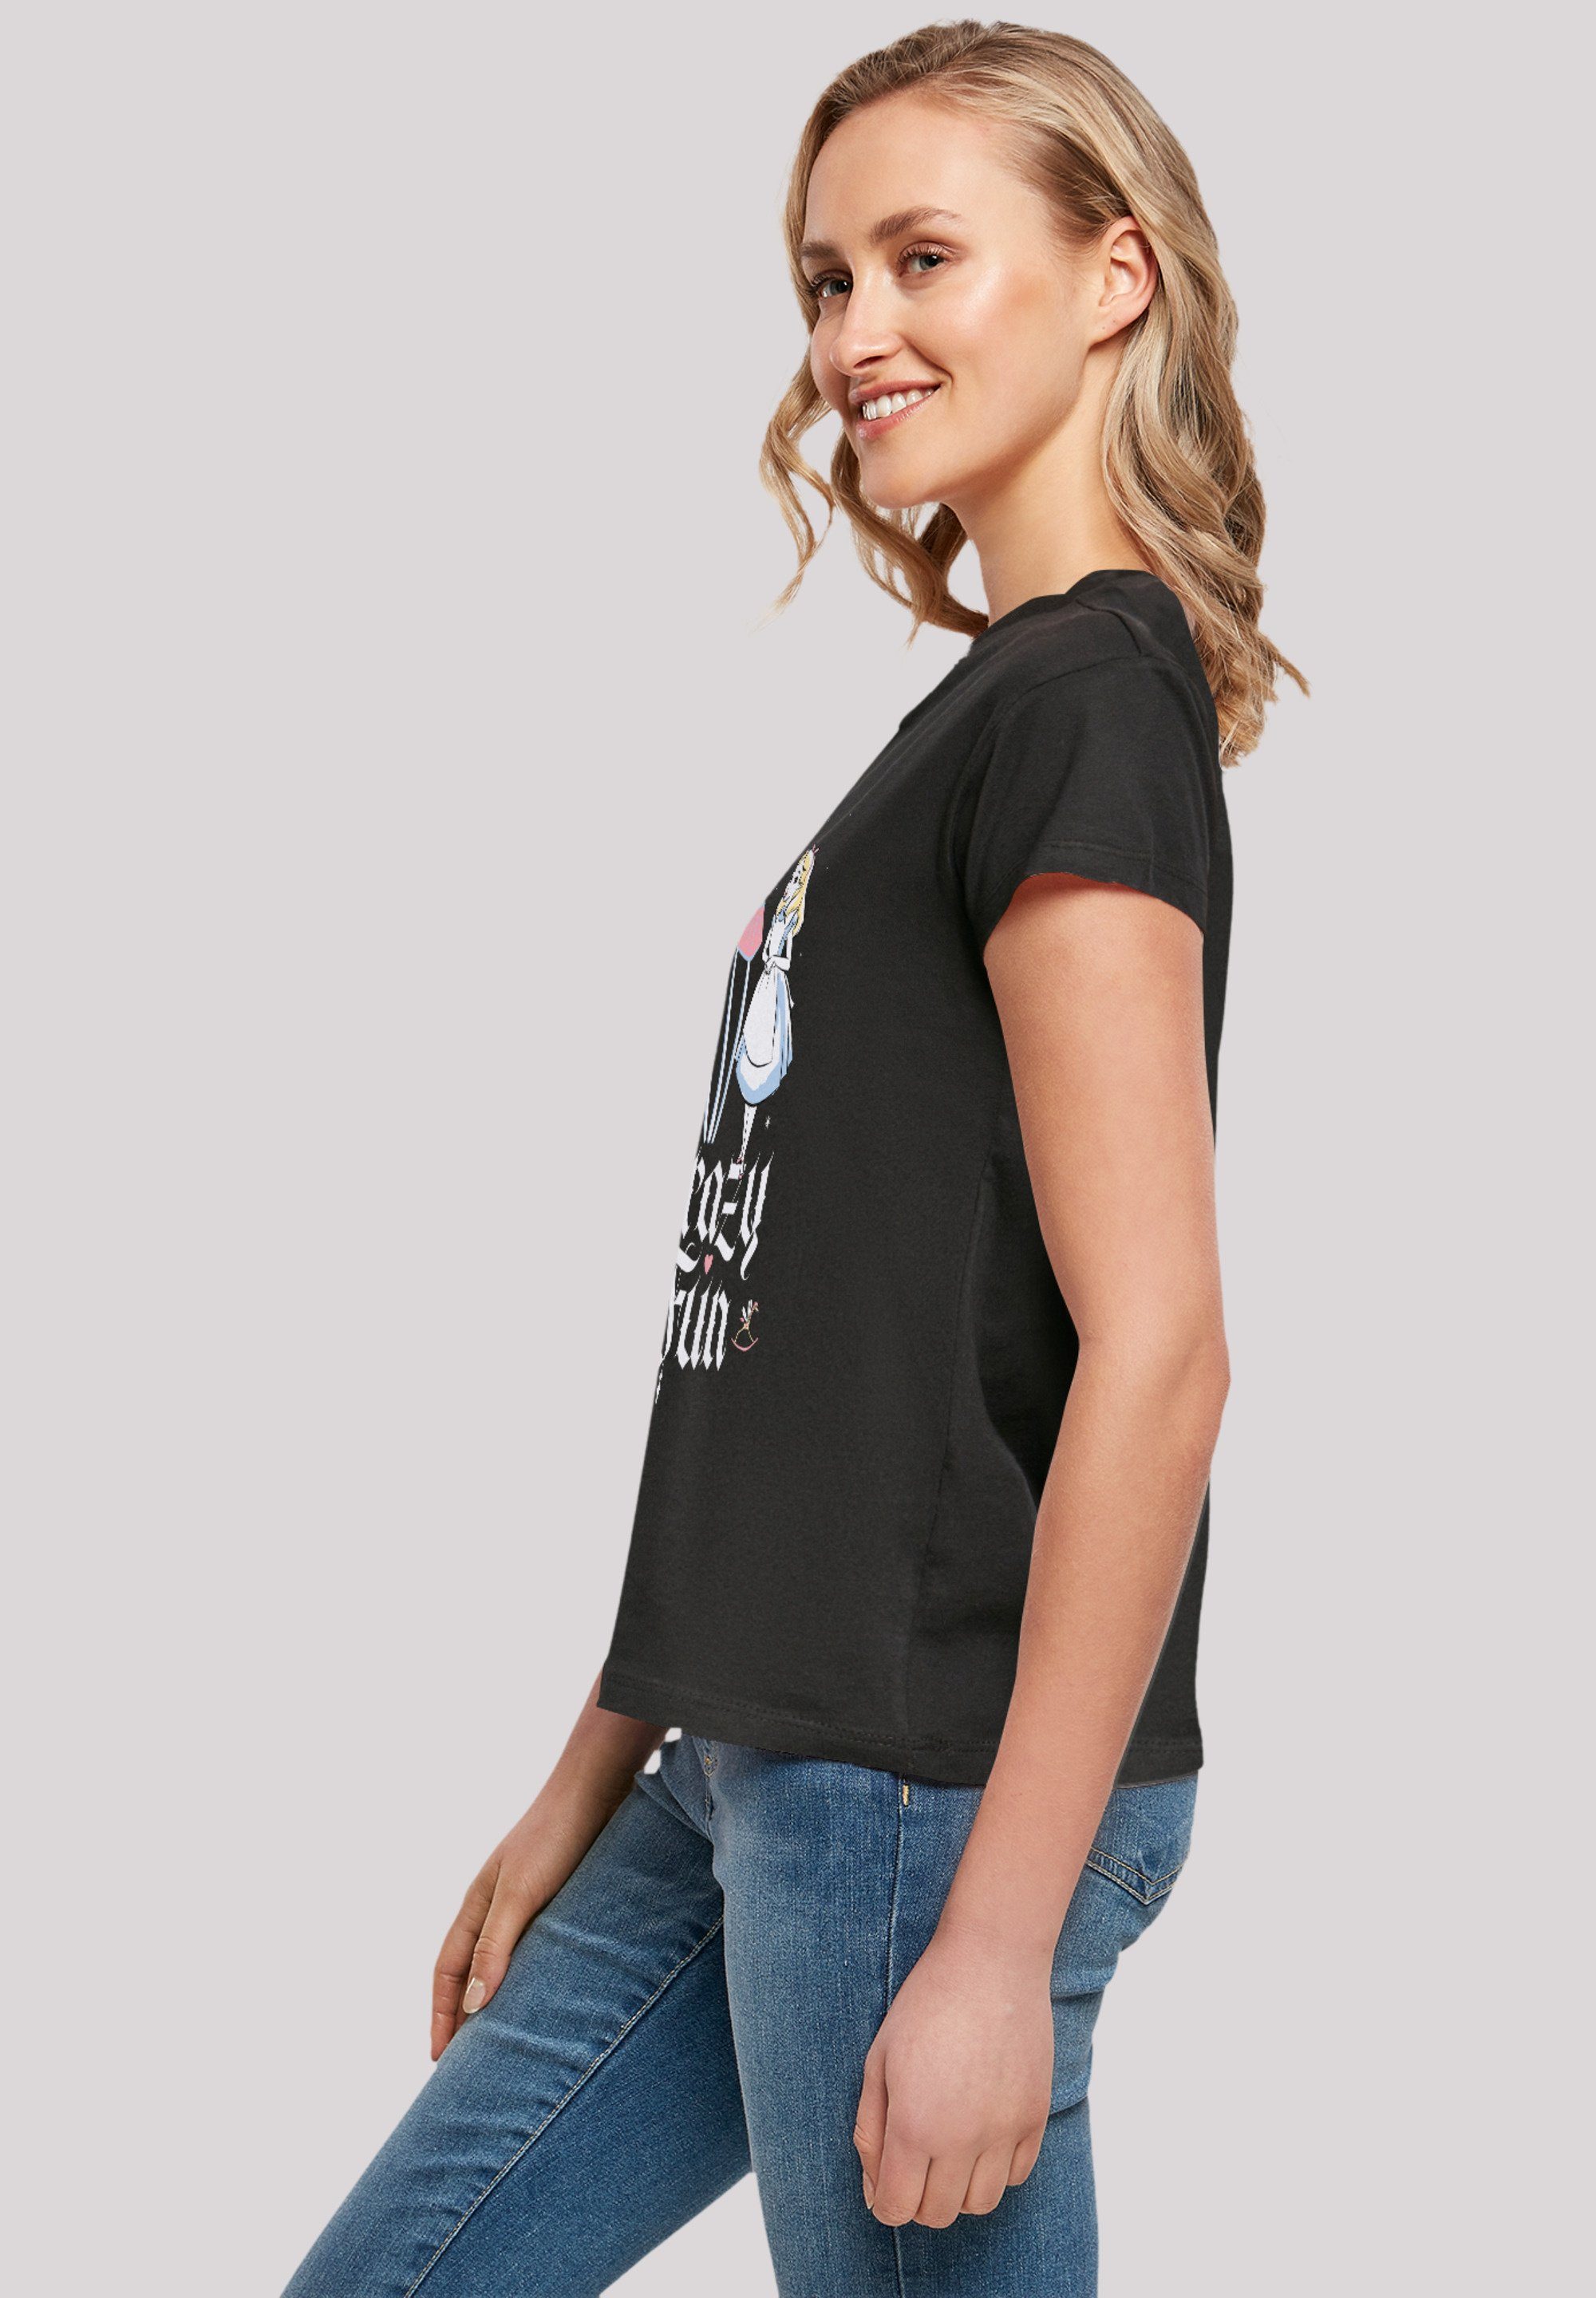 Wunderland Qualität Premium F4NT4STIC im Fun Crazy T-Shirt Disney Alice